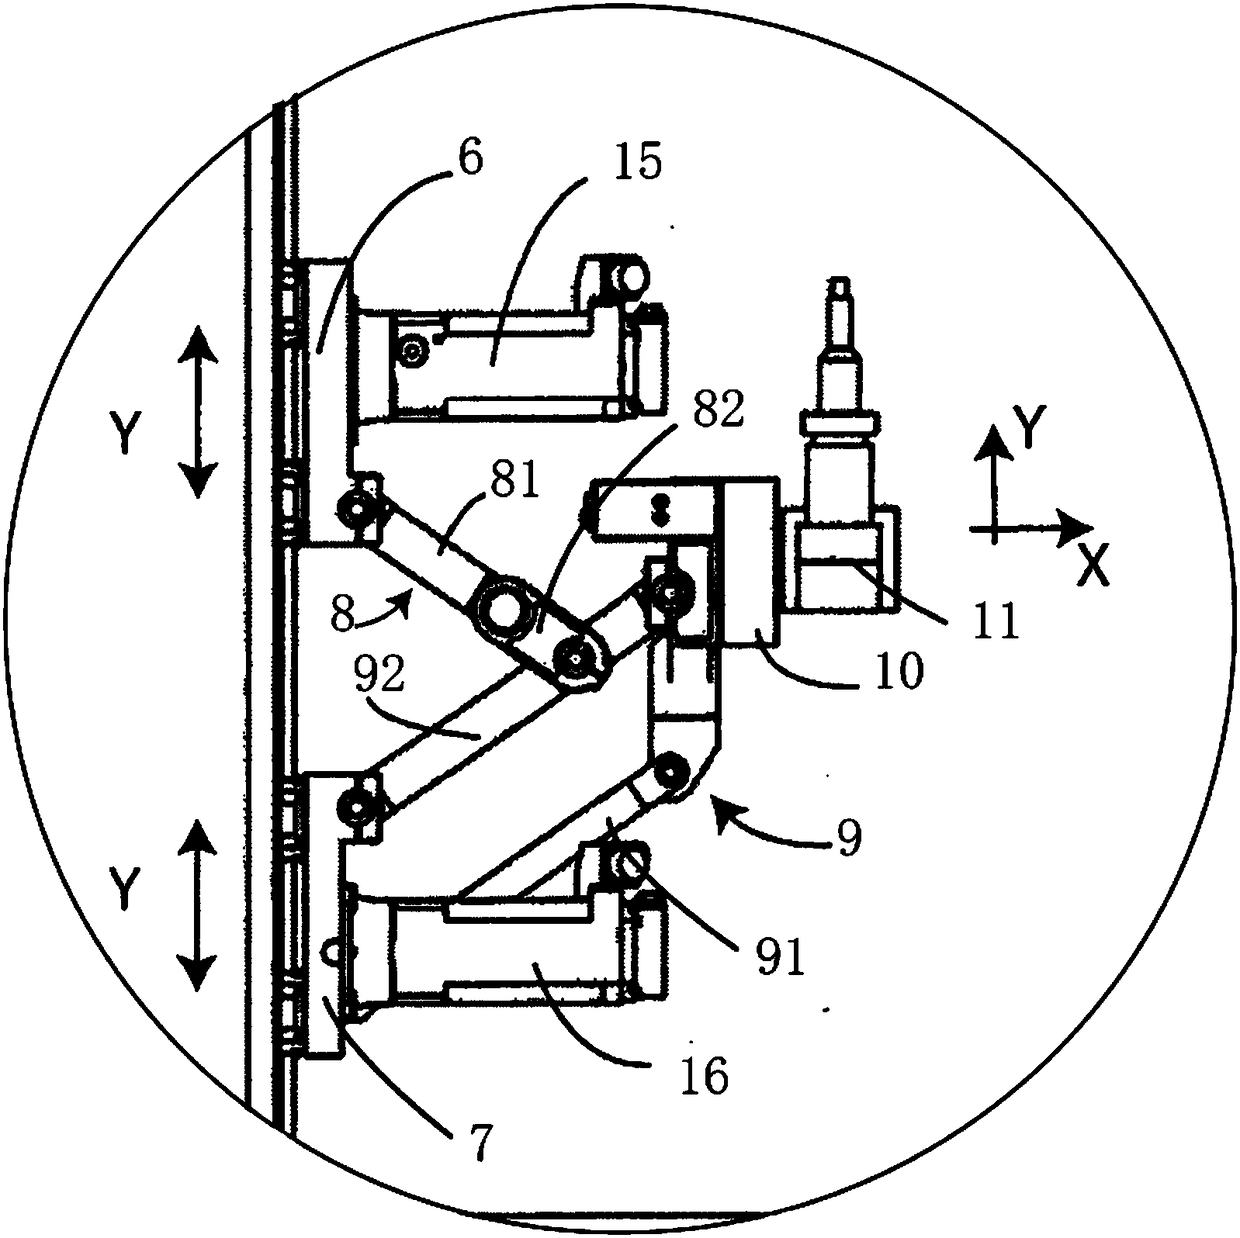 Laser cutting machine of board or strip